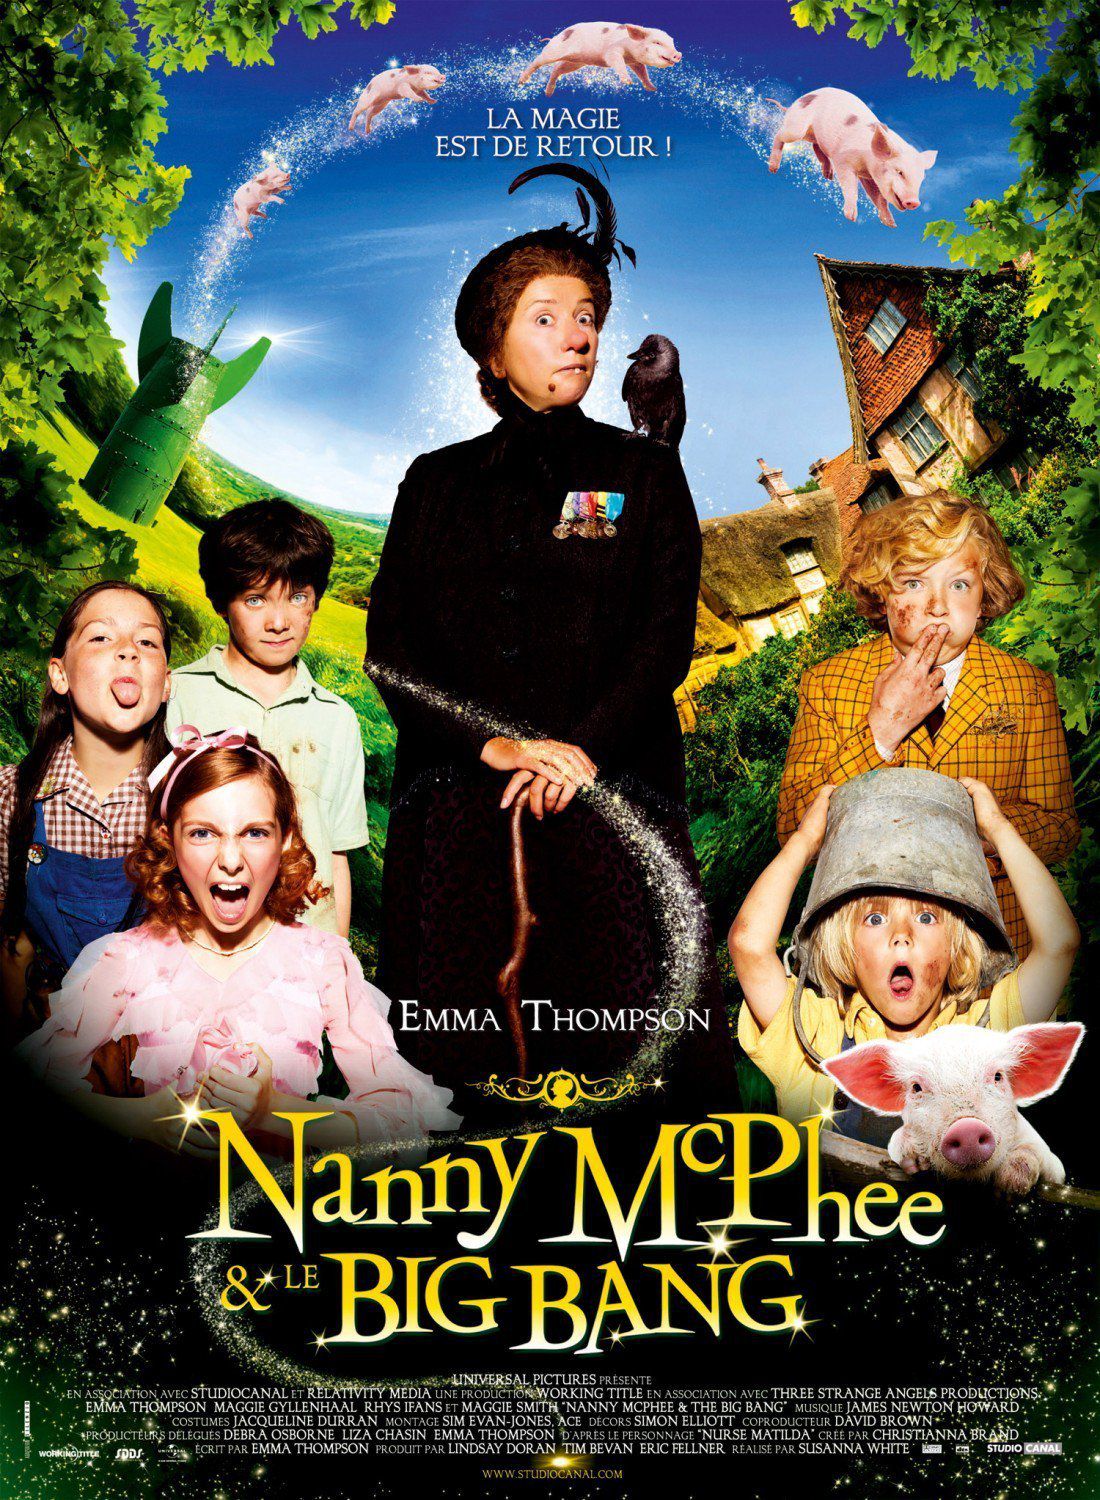 Nanny McPhee et le Big Bang - Film (2010) streaming VF gratuit complet